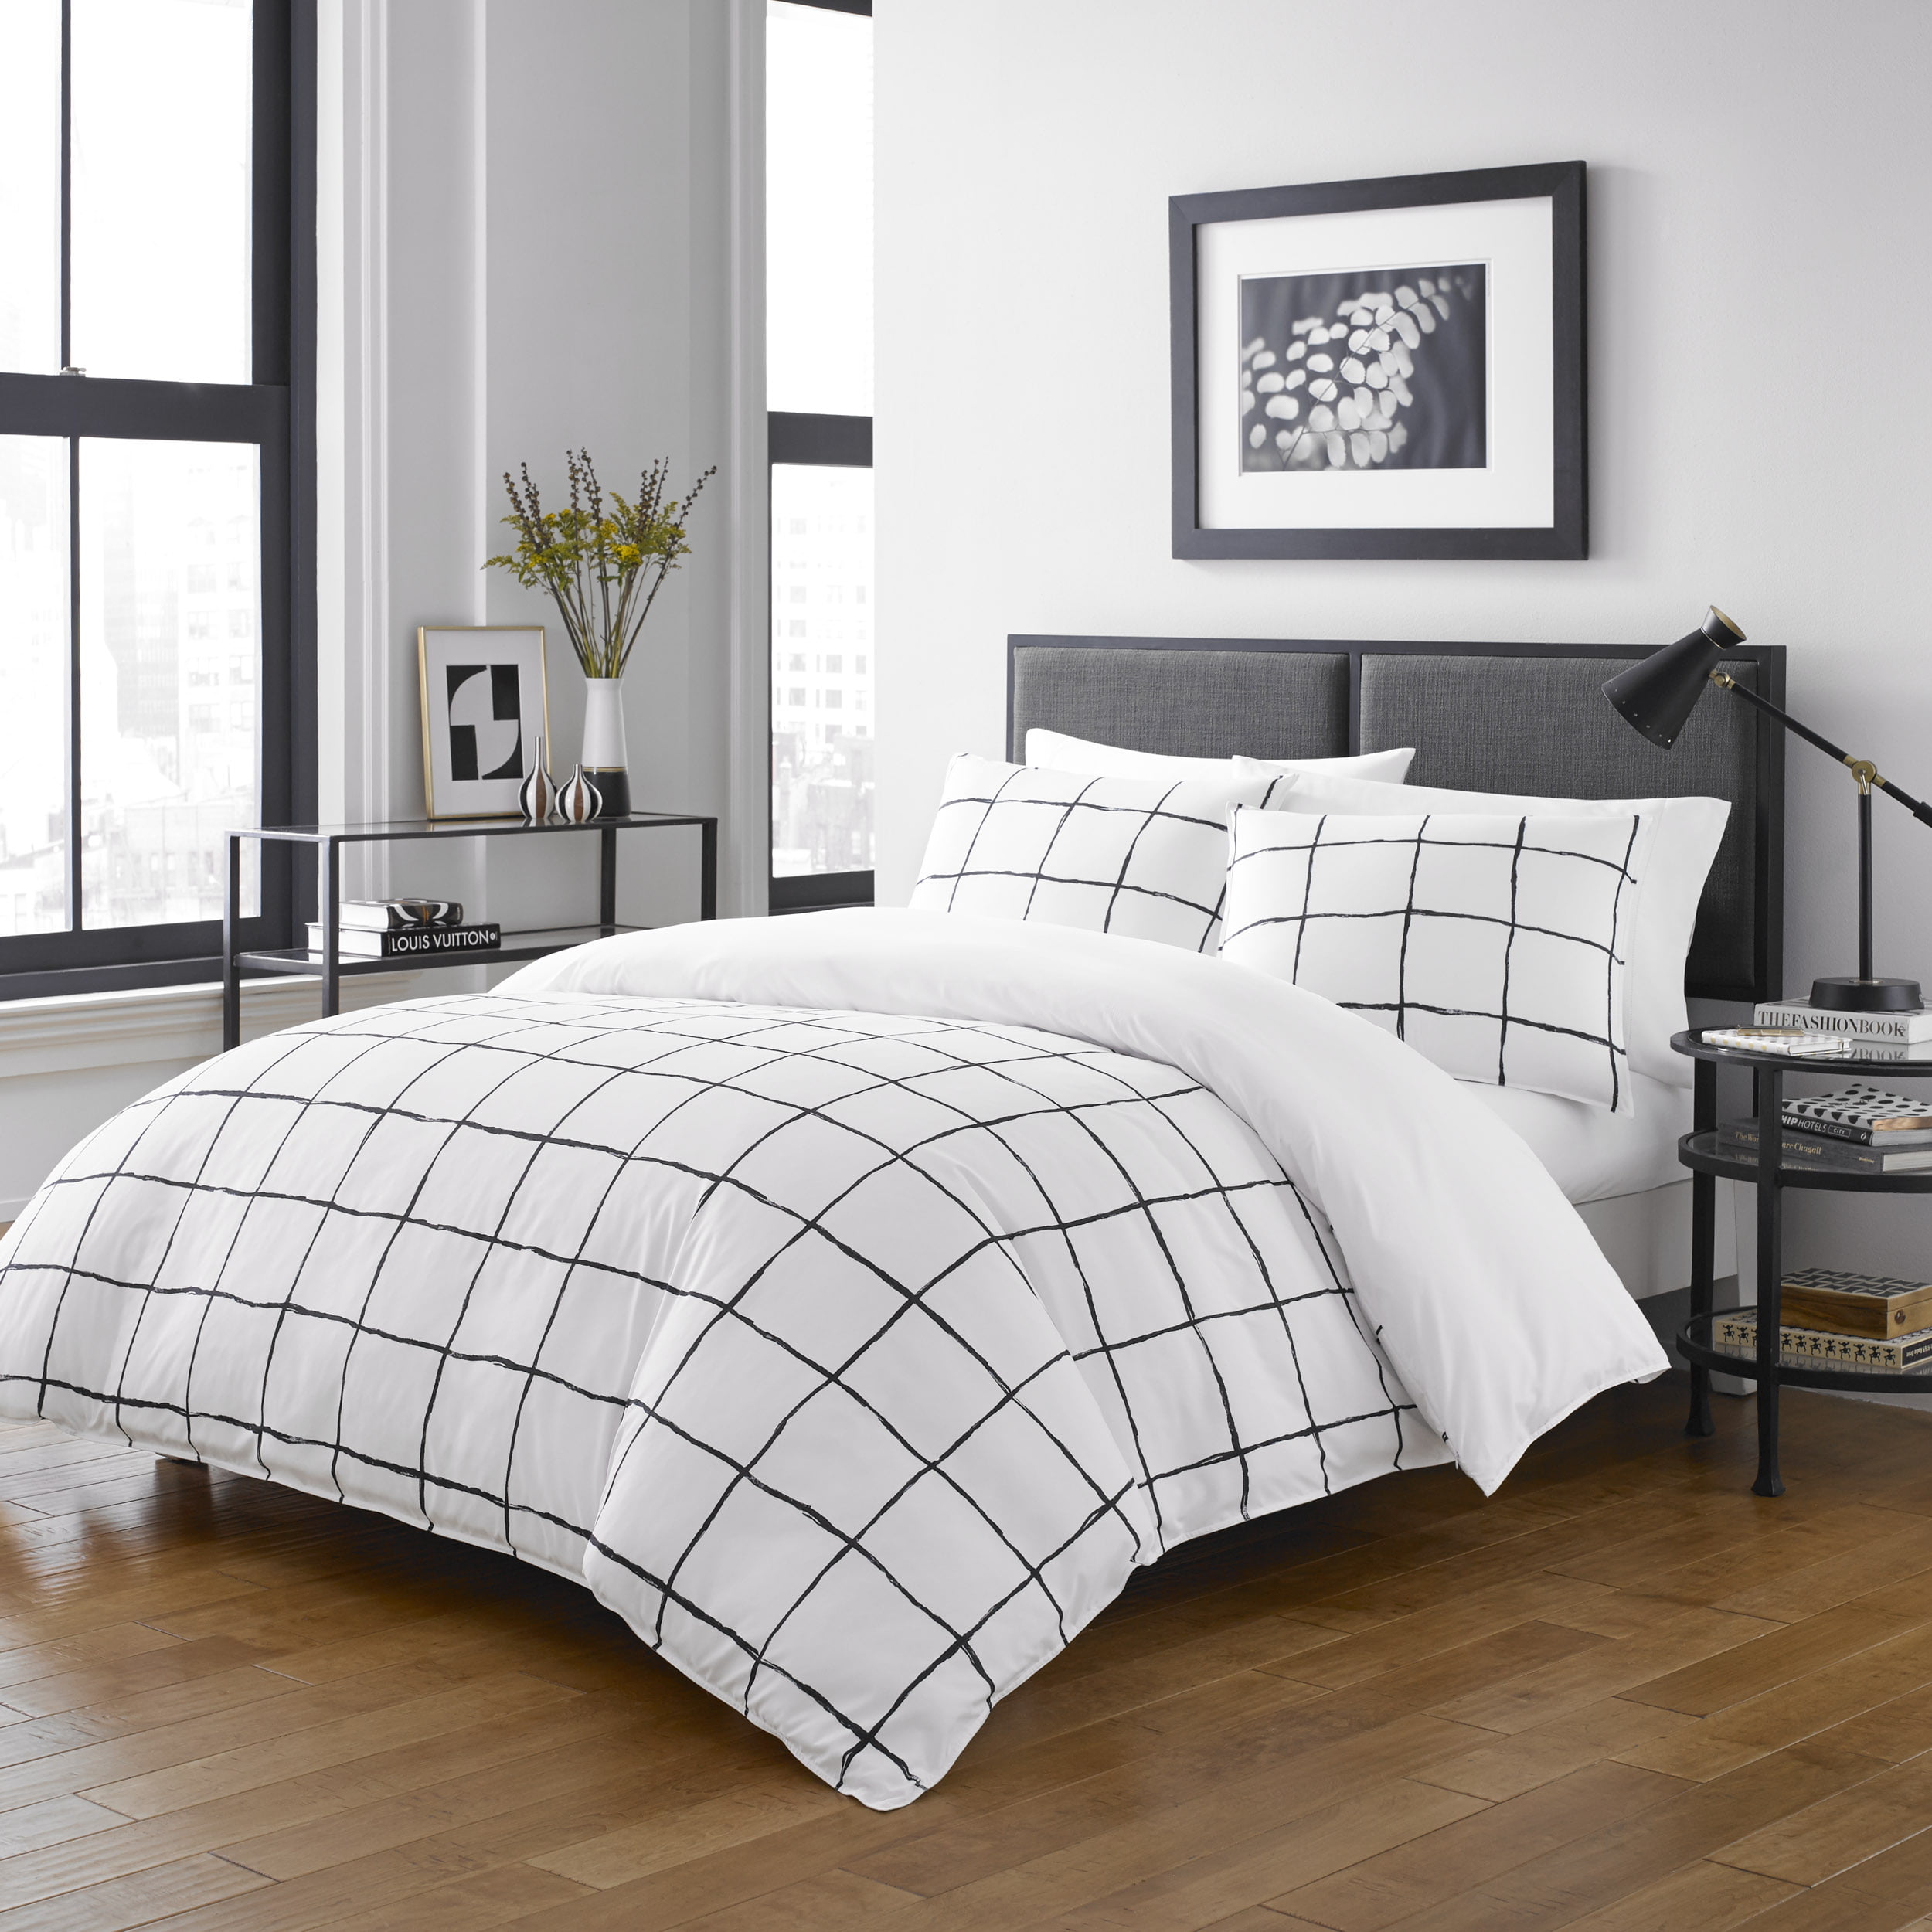 Comforter sets gray black with logo white full louis vuitton